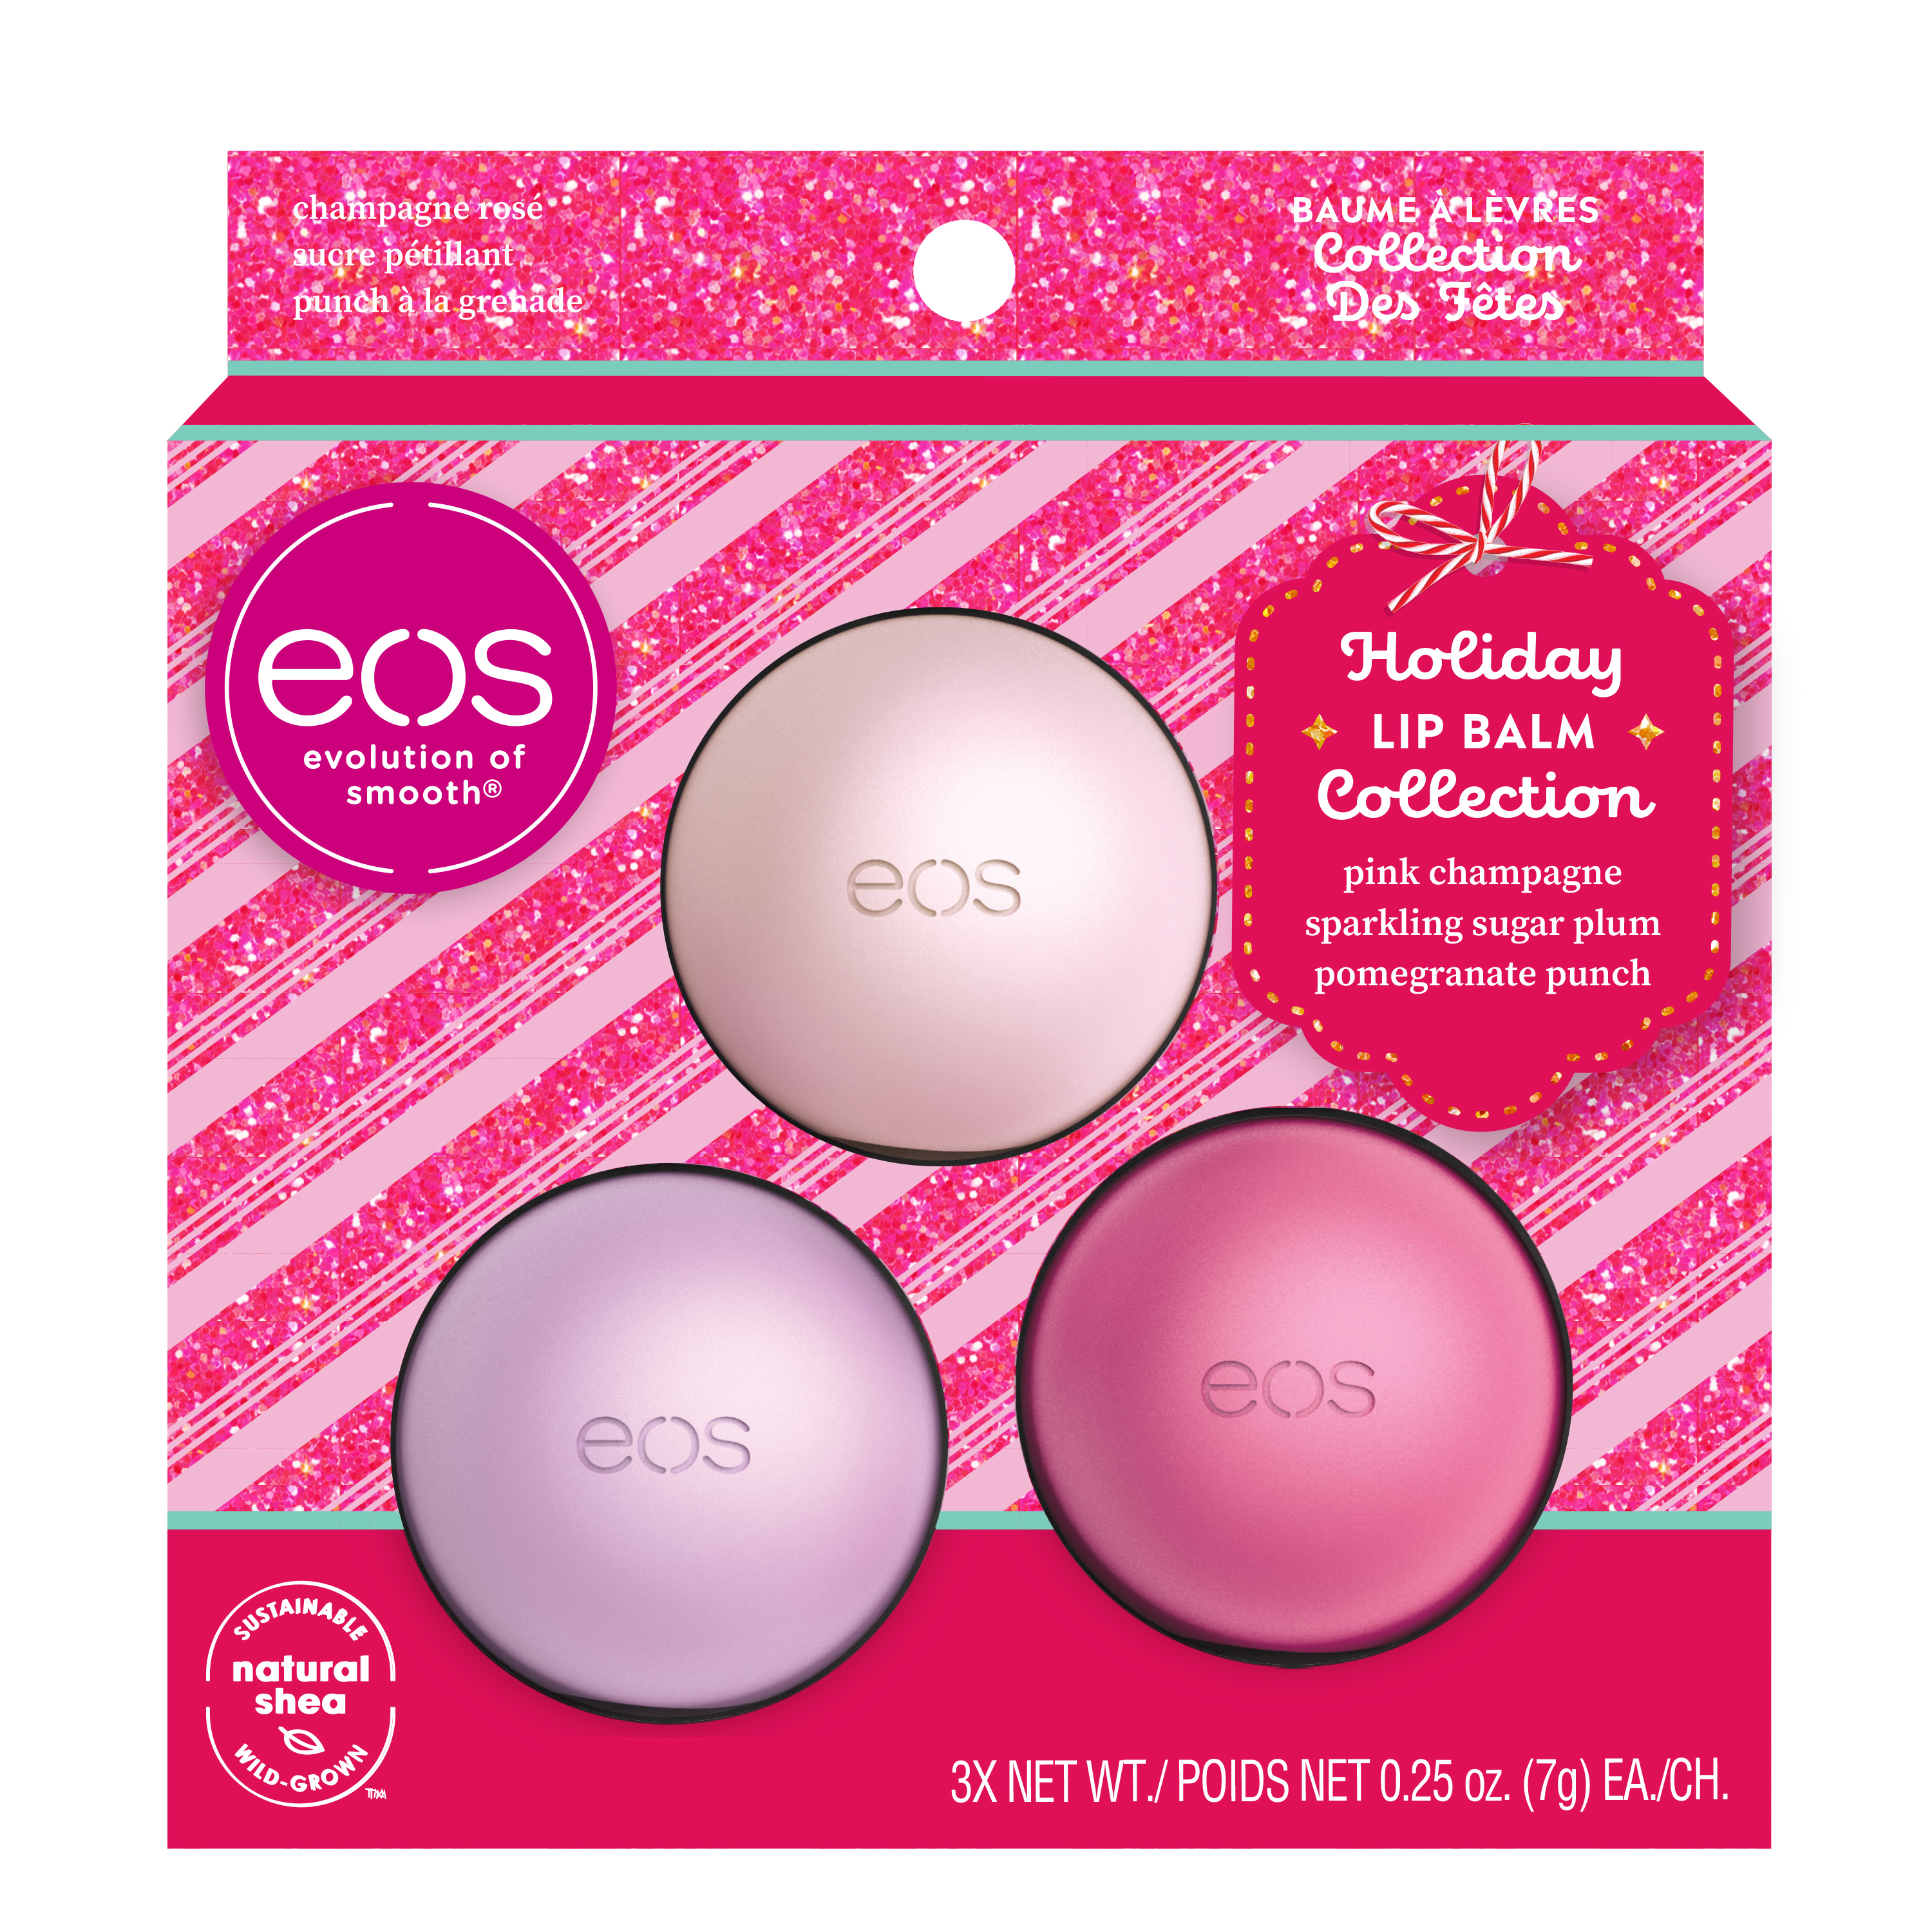 eos Holiday Lip Balm Trio - Pink Champagne, Sparkling Sugar Plum, & Pomegranate Punch, 0.25 oz/3pk - image 1 of 5